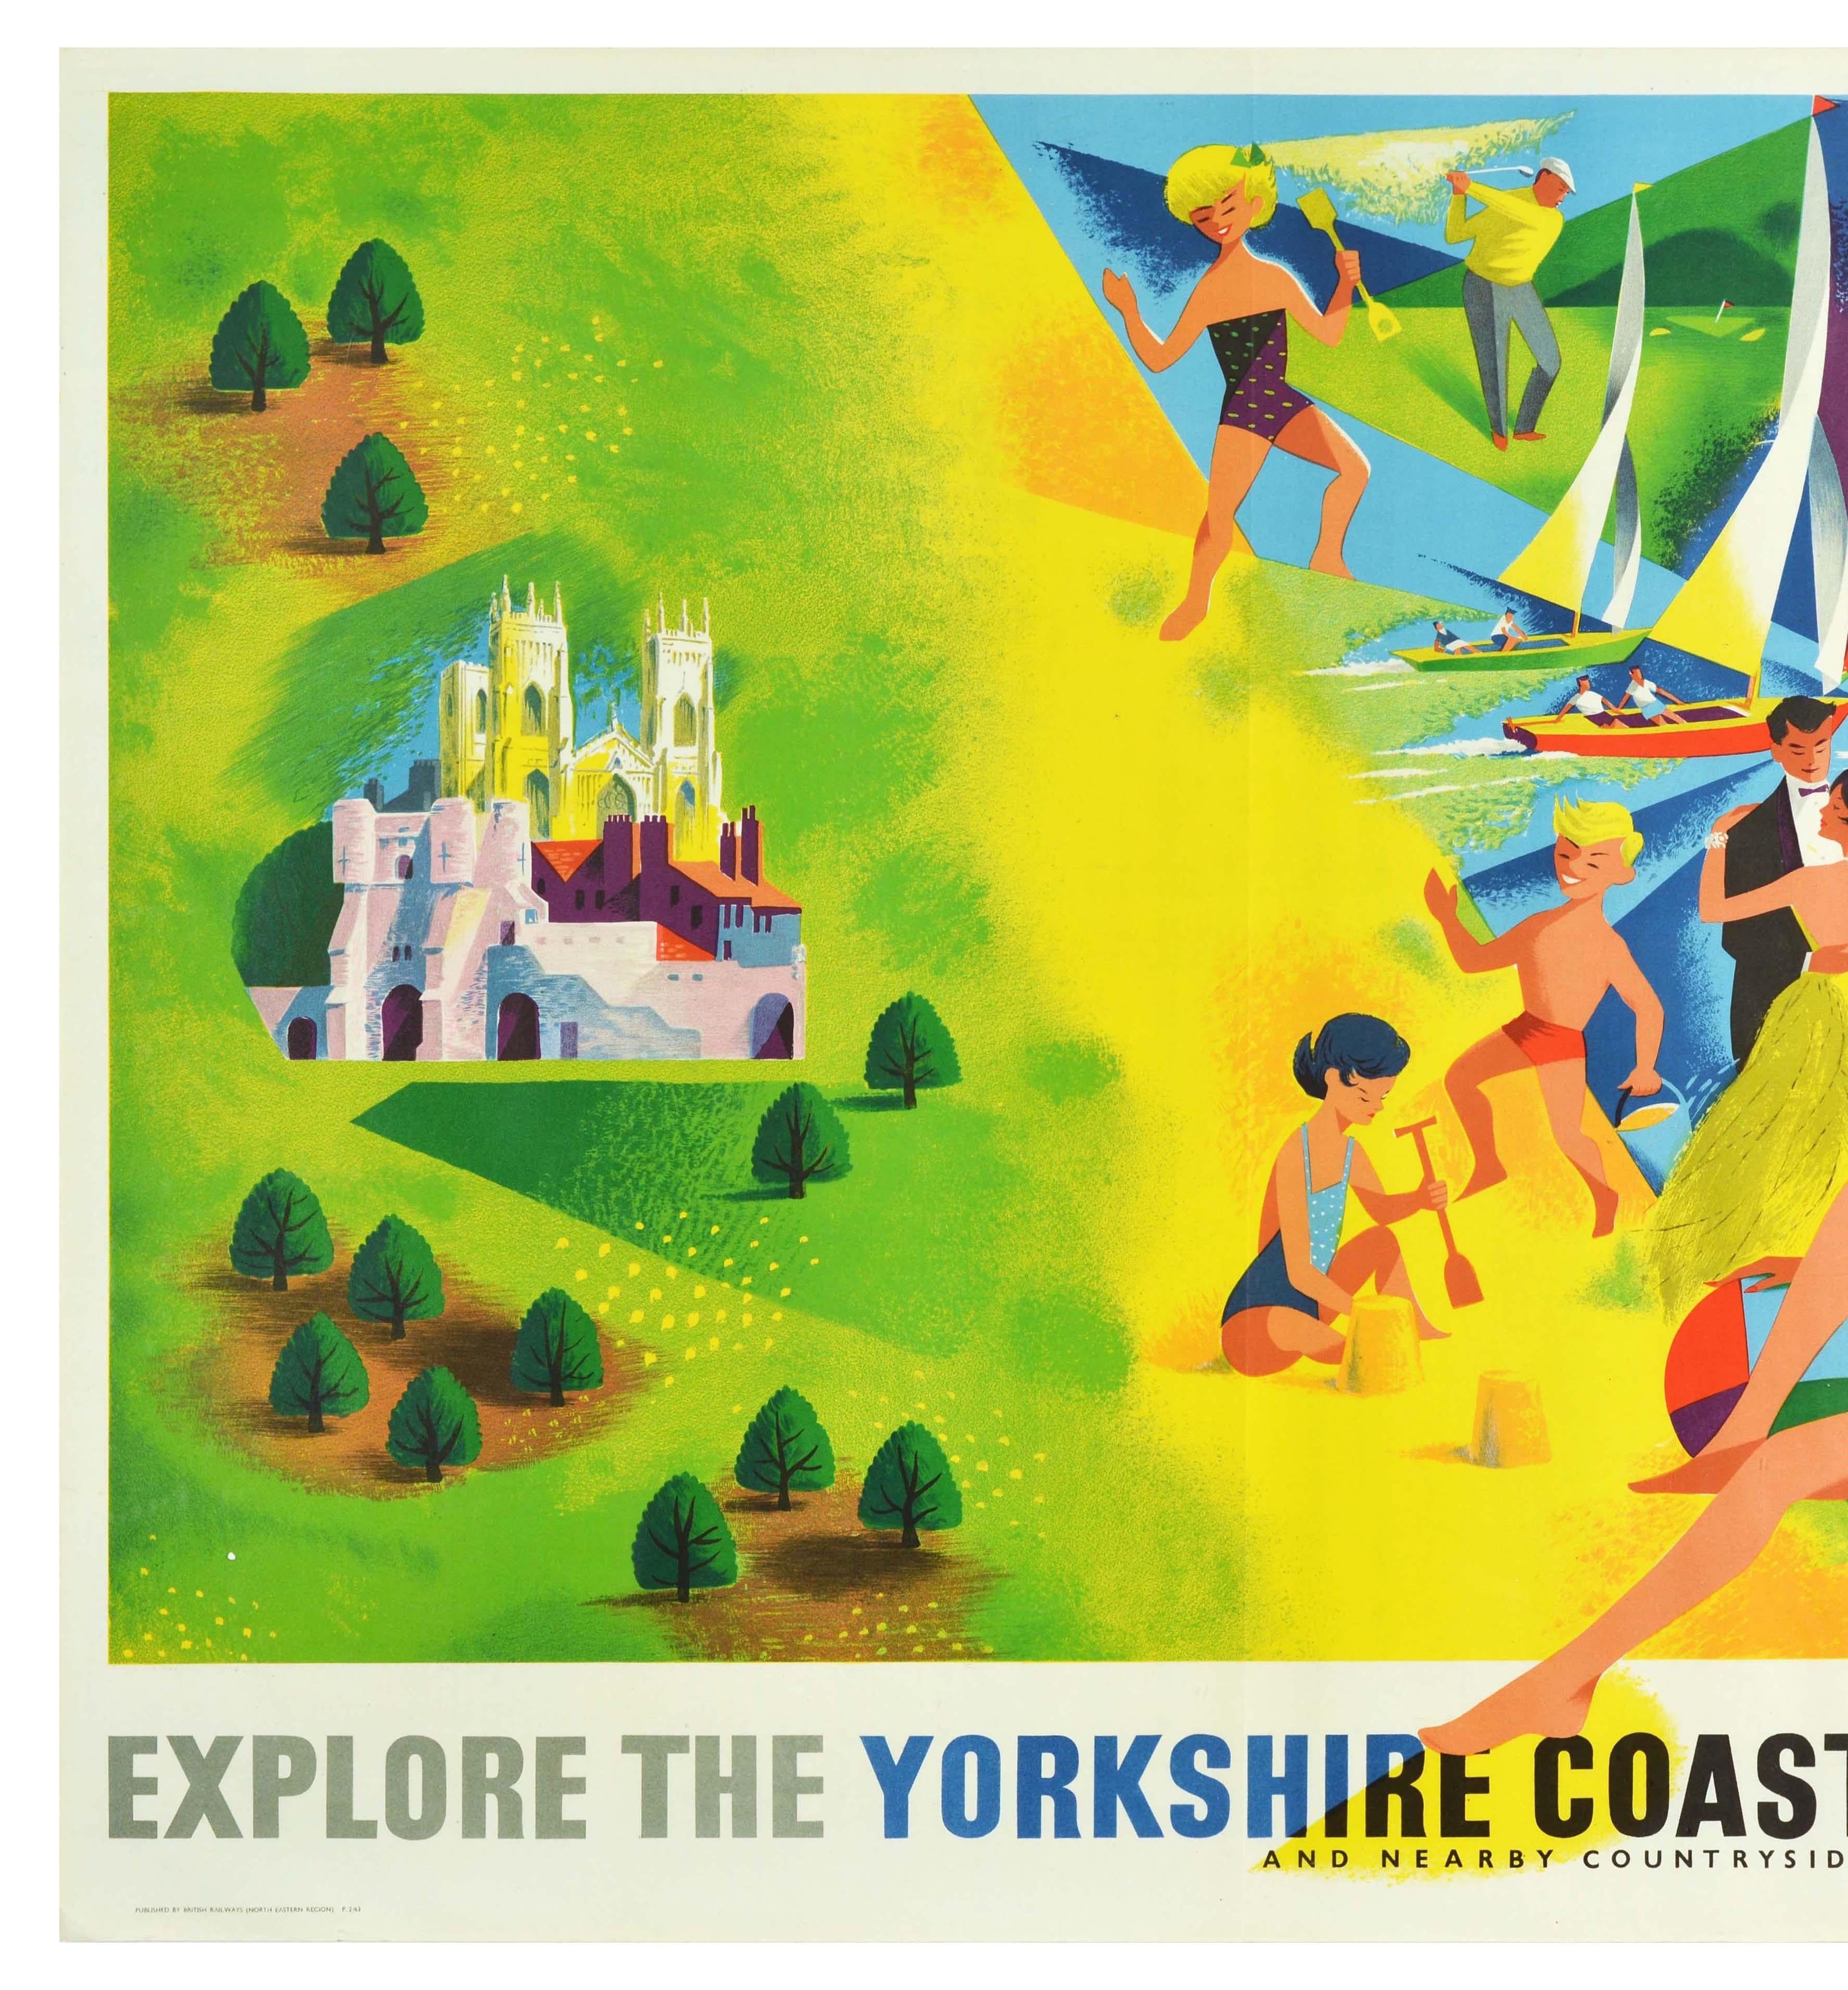 Original Vintage Railway Poster Explore The Yorkshire Coast Countryside By Train - Print by Reginald Montague Lander